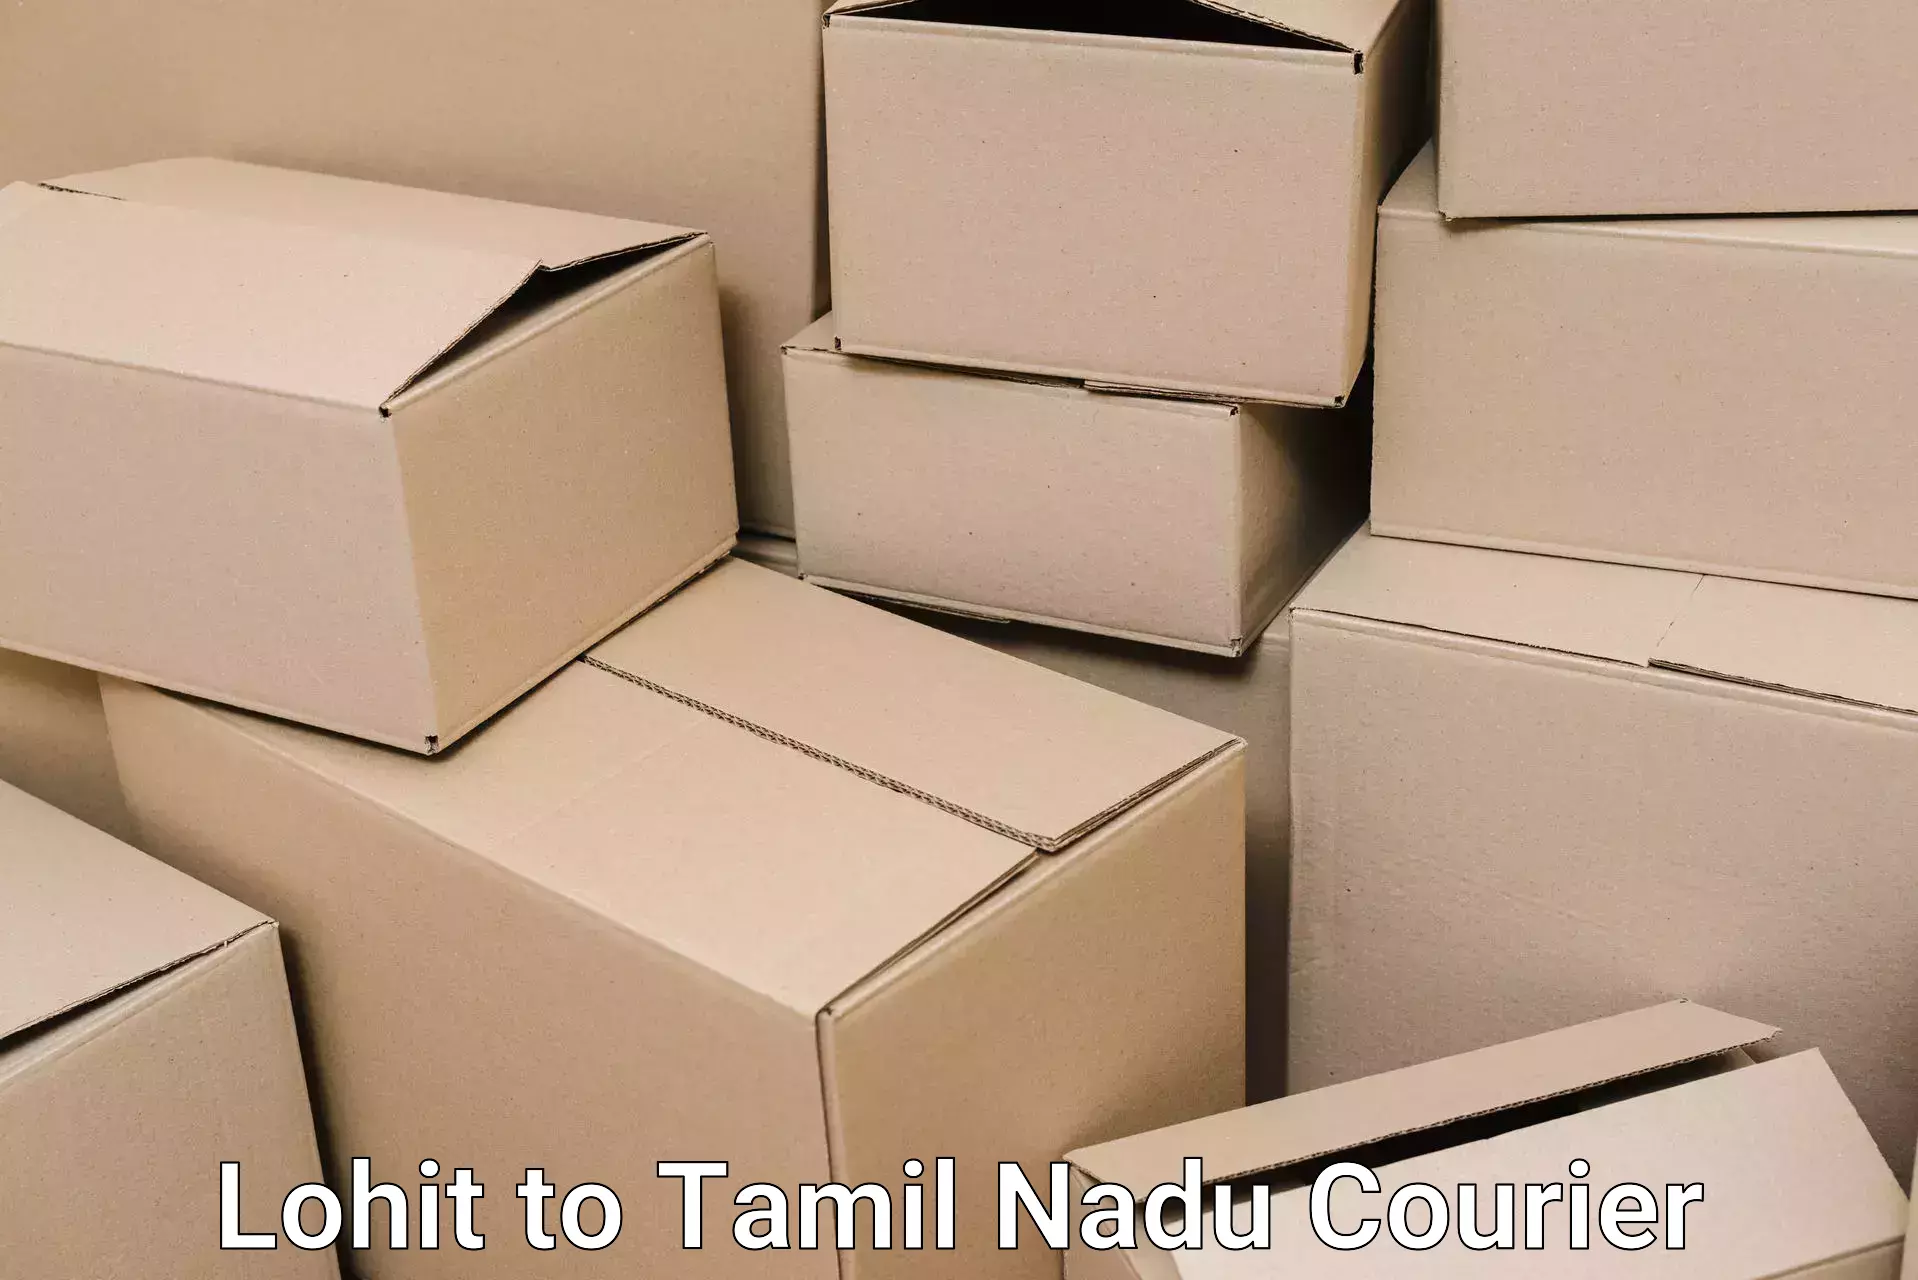 Furniture moving experts Lohit to Thiruthuraipoondi